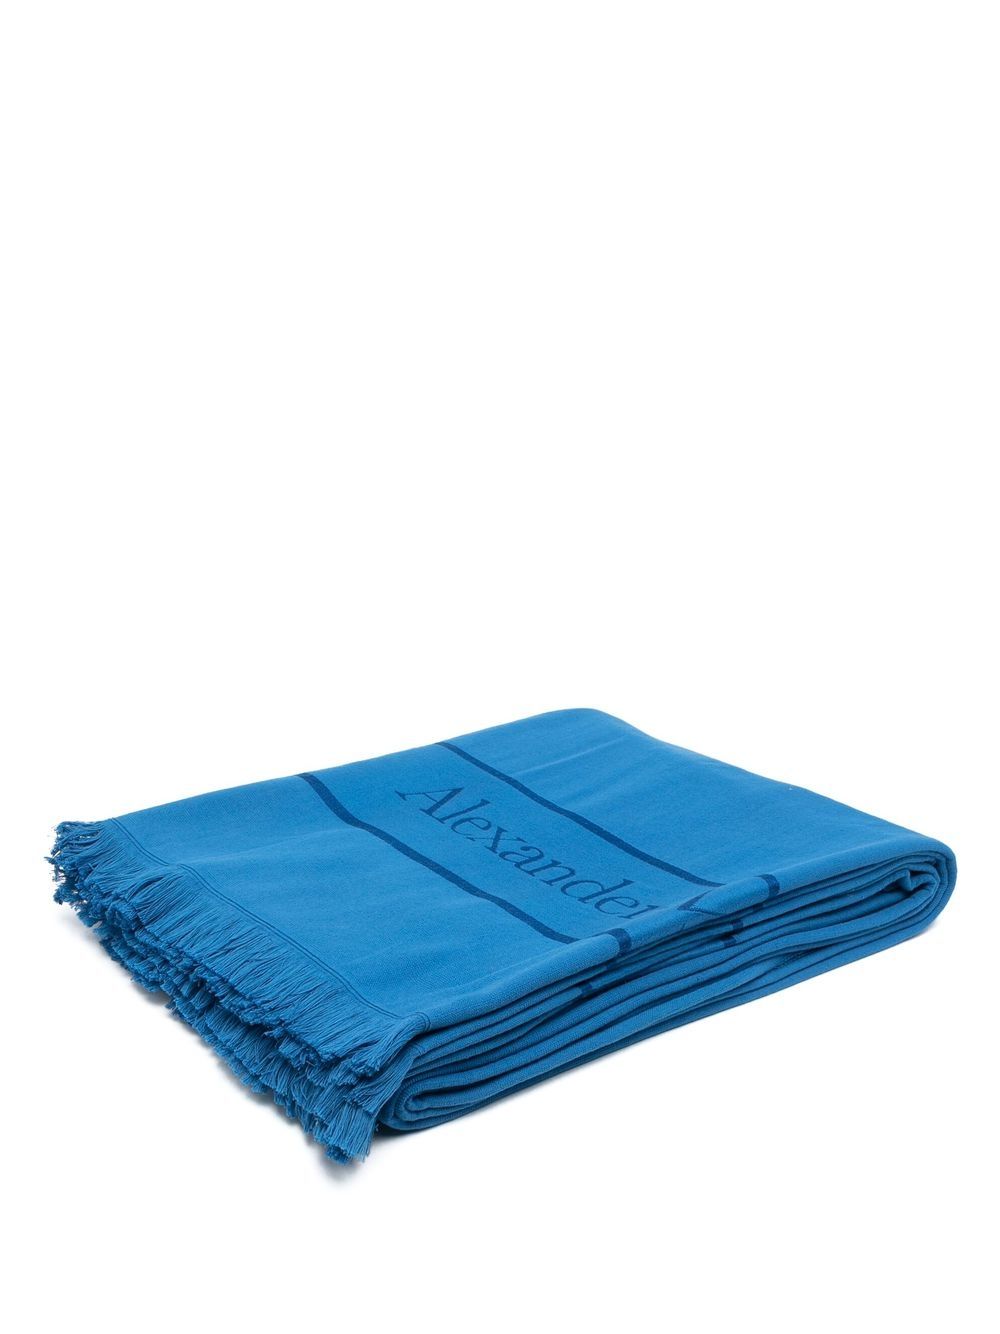 Alexander McQueen jacquard logo beach towel - Blue von Alexander McQueen